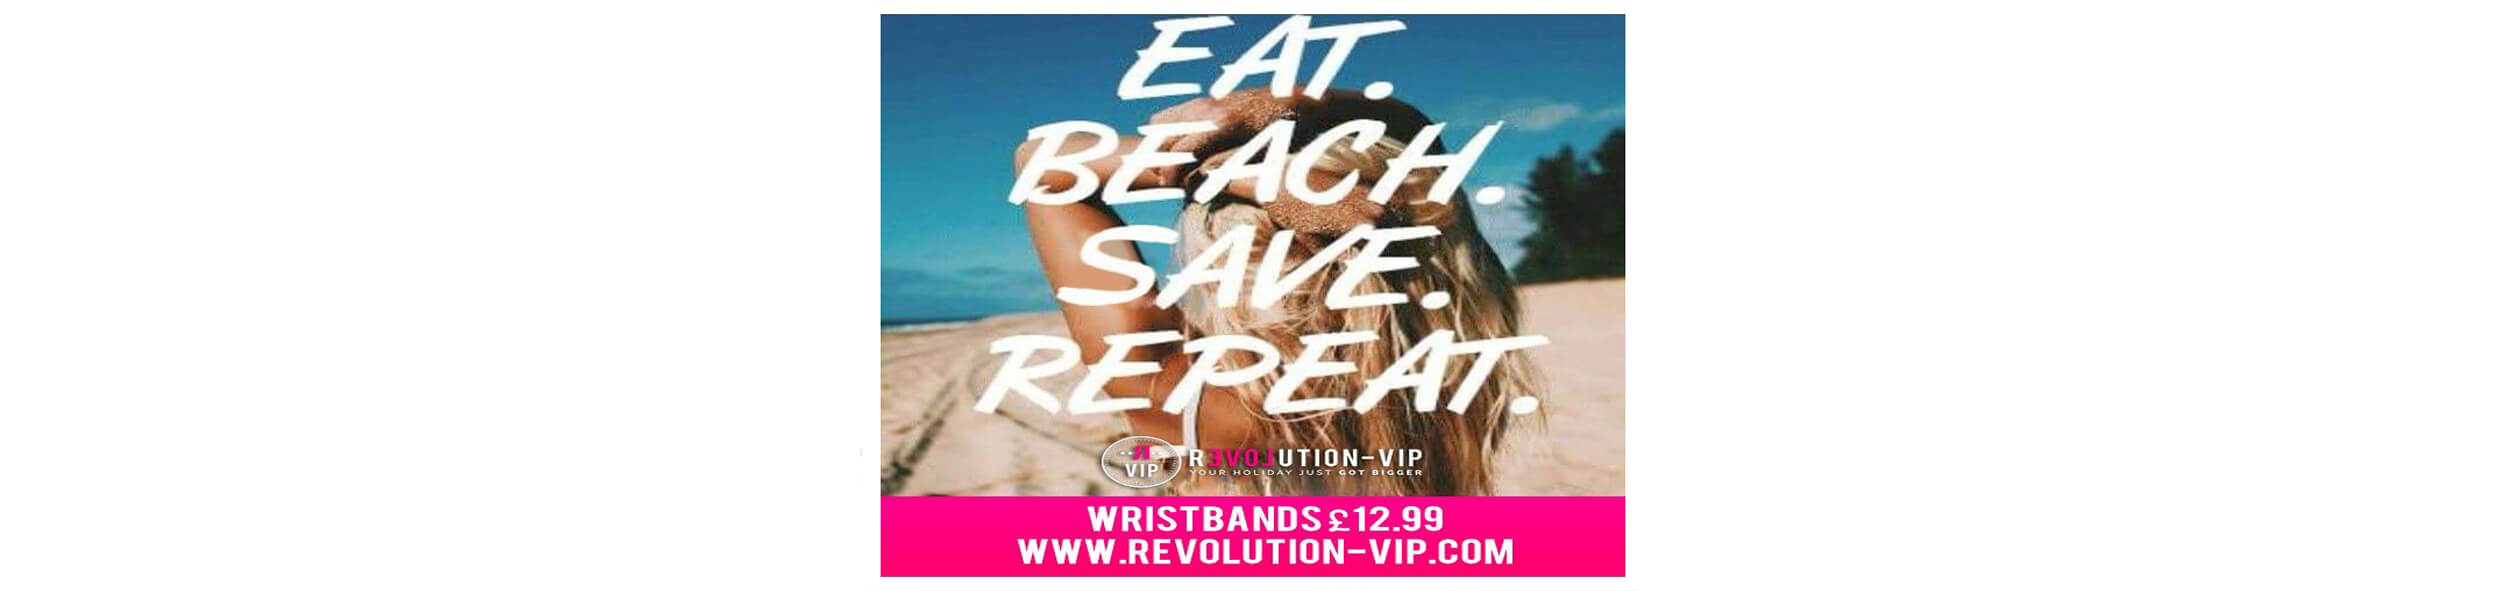 eat beach rave repeat